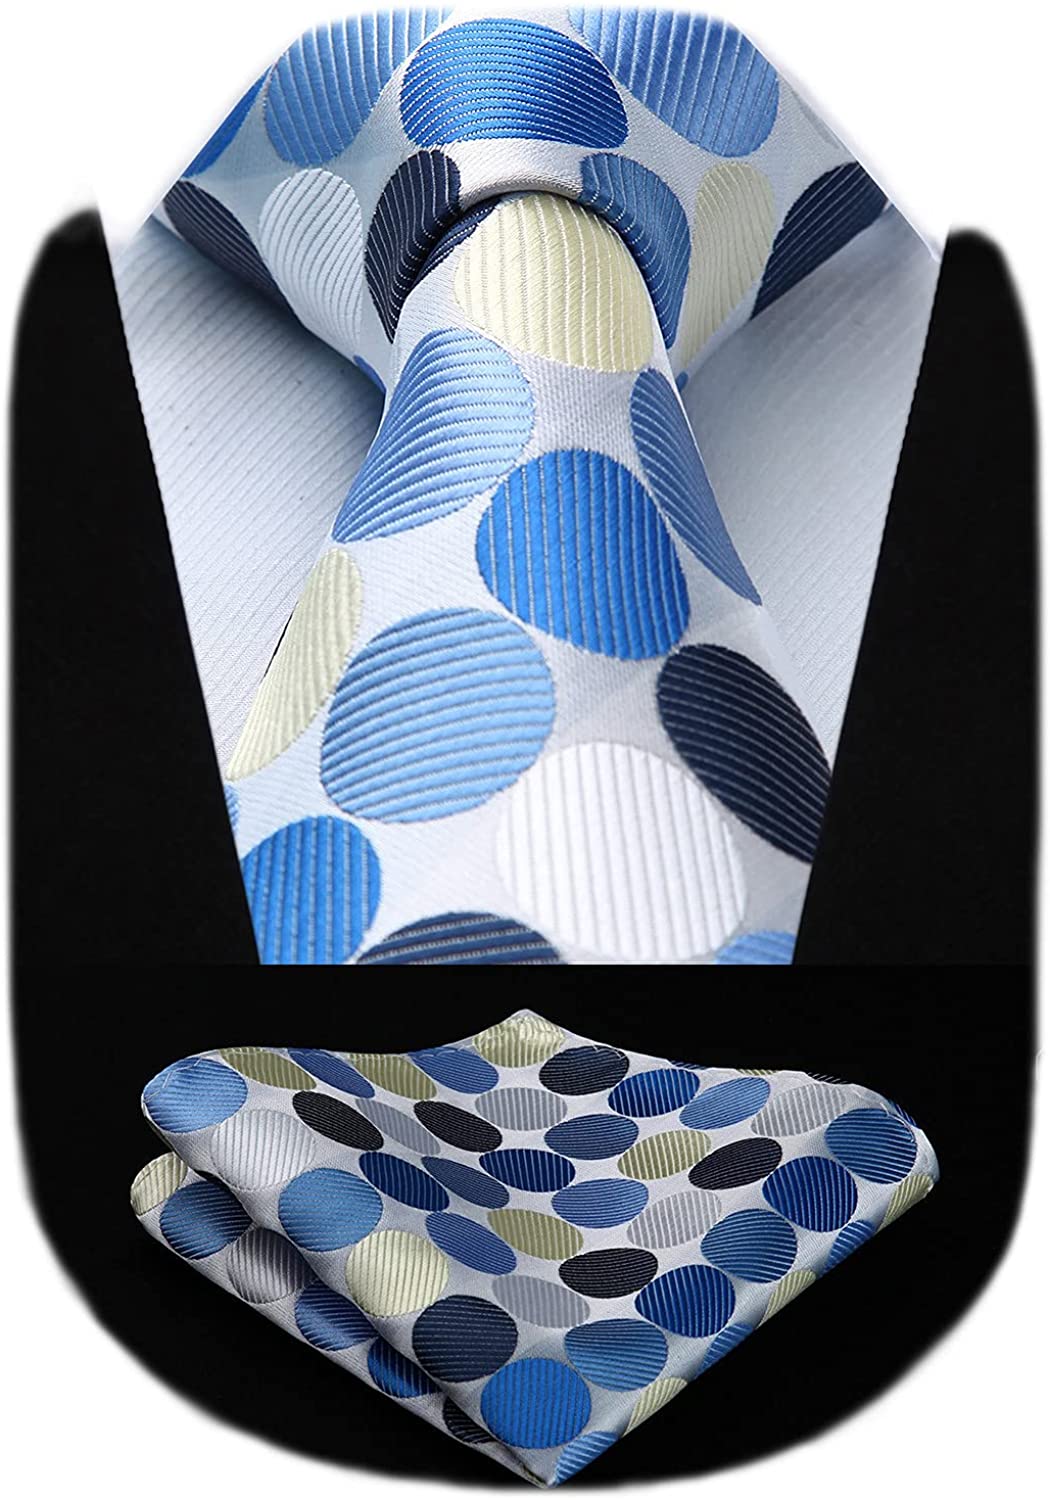 HISDERN Extra Long Polka Dots Stripe Tie Handkerchief Men's Necktie & Pocket Square Set 